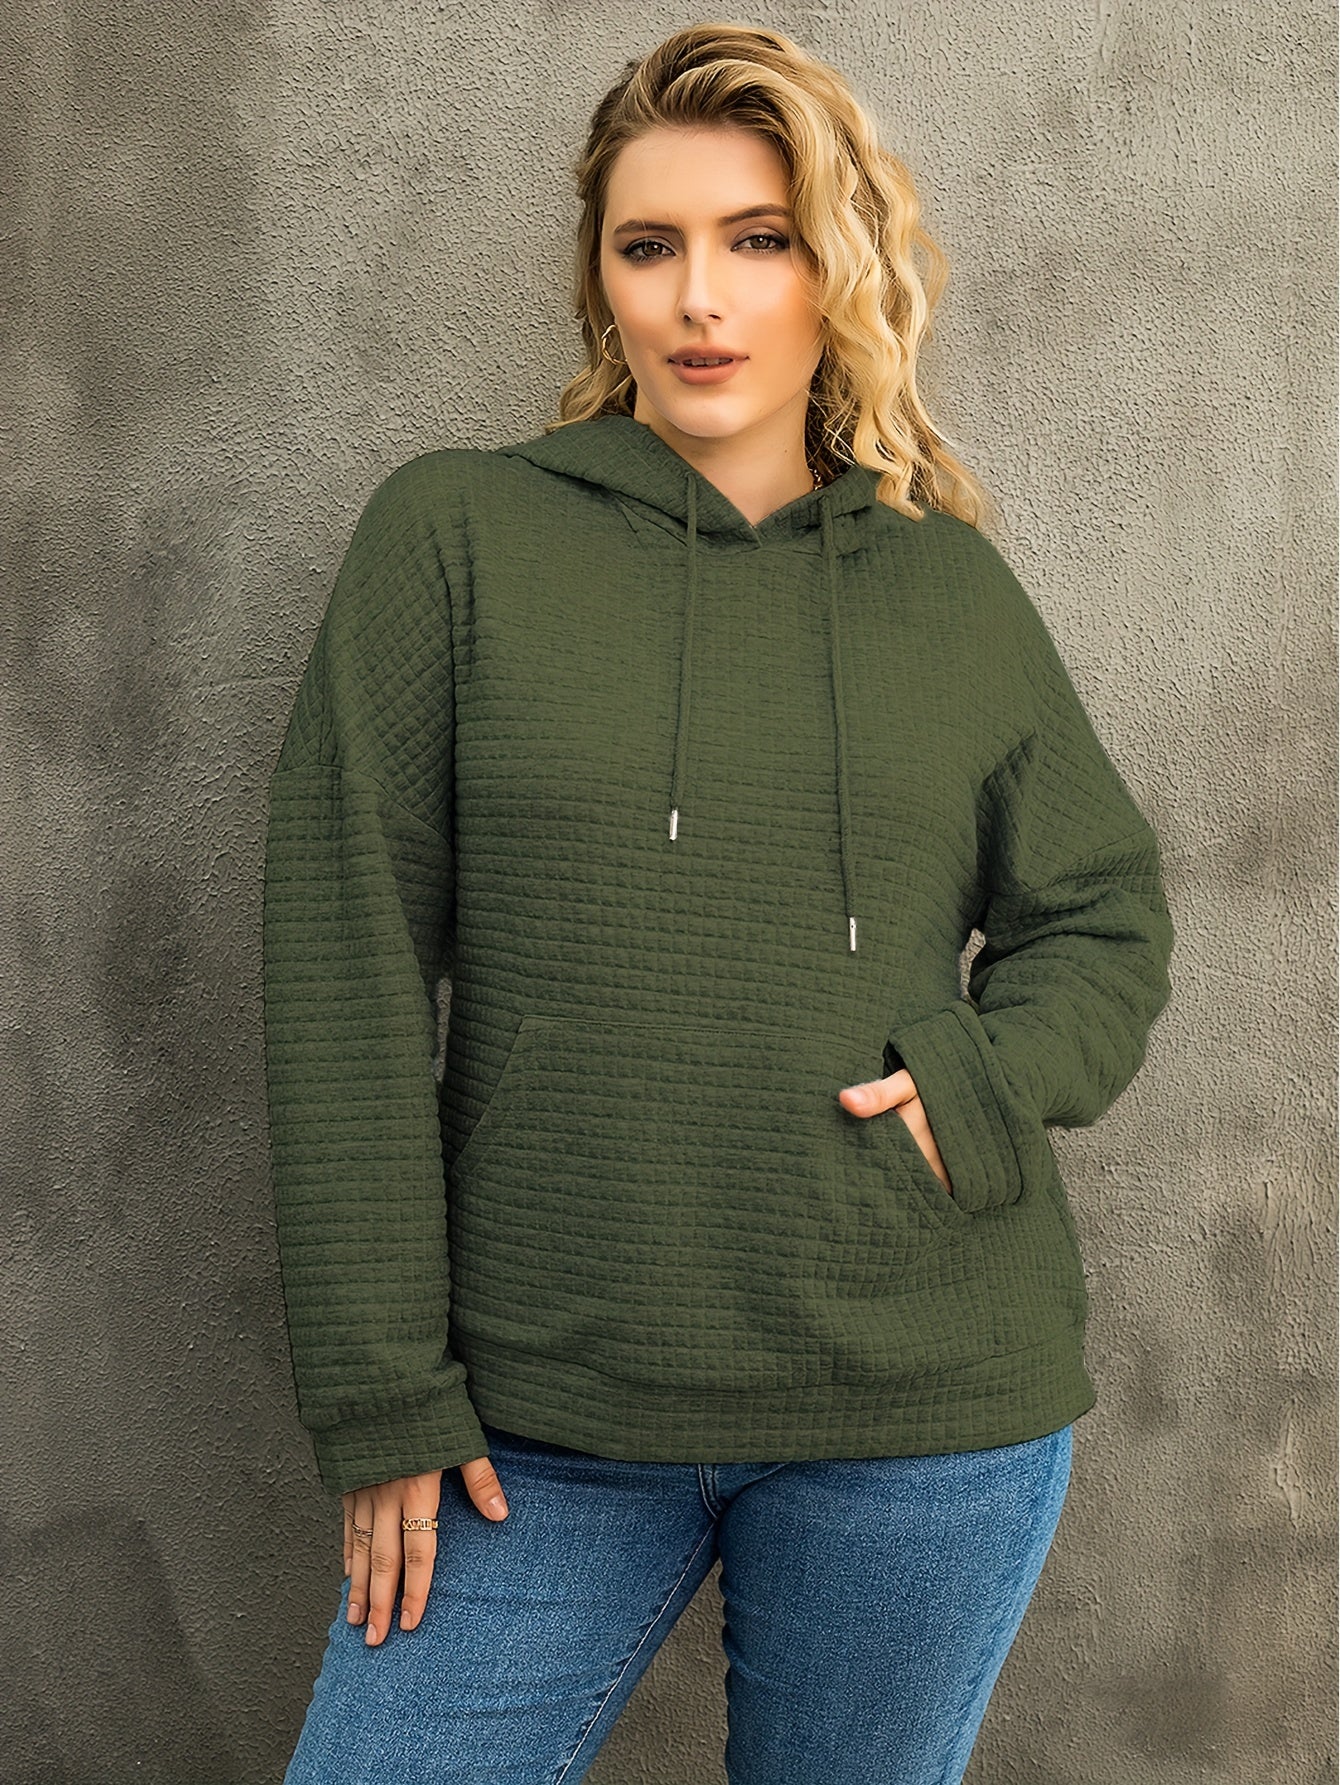 Plus Size Casual Sweatshirt, Women's Plus Solid Waffle Pattern Long Sleeve Drawstring Hoodie Sweatshirt With Pockets